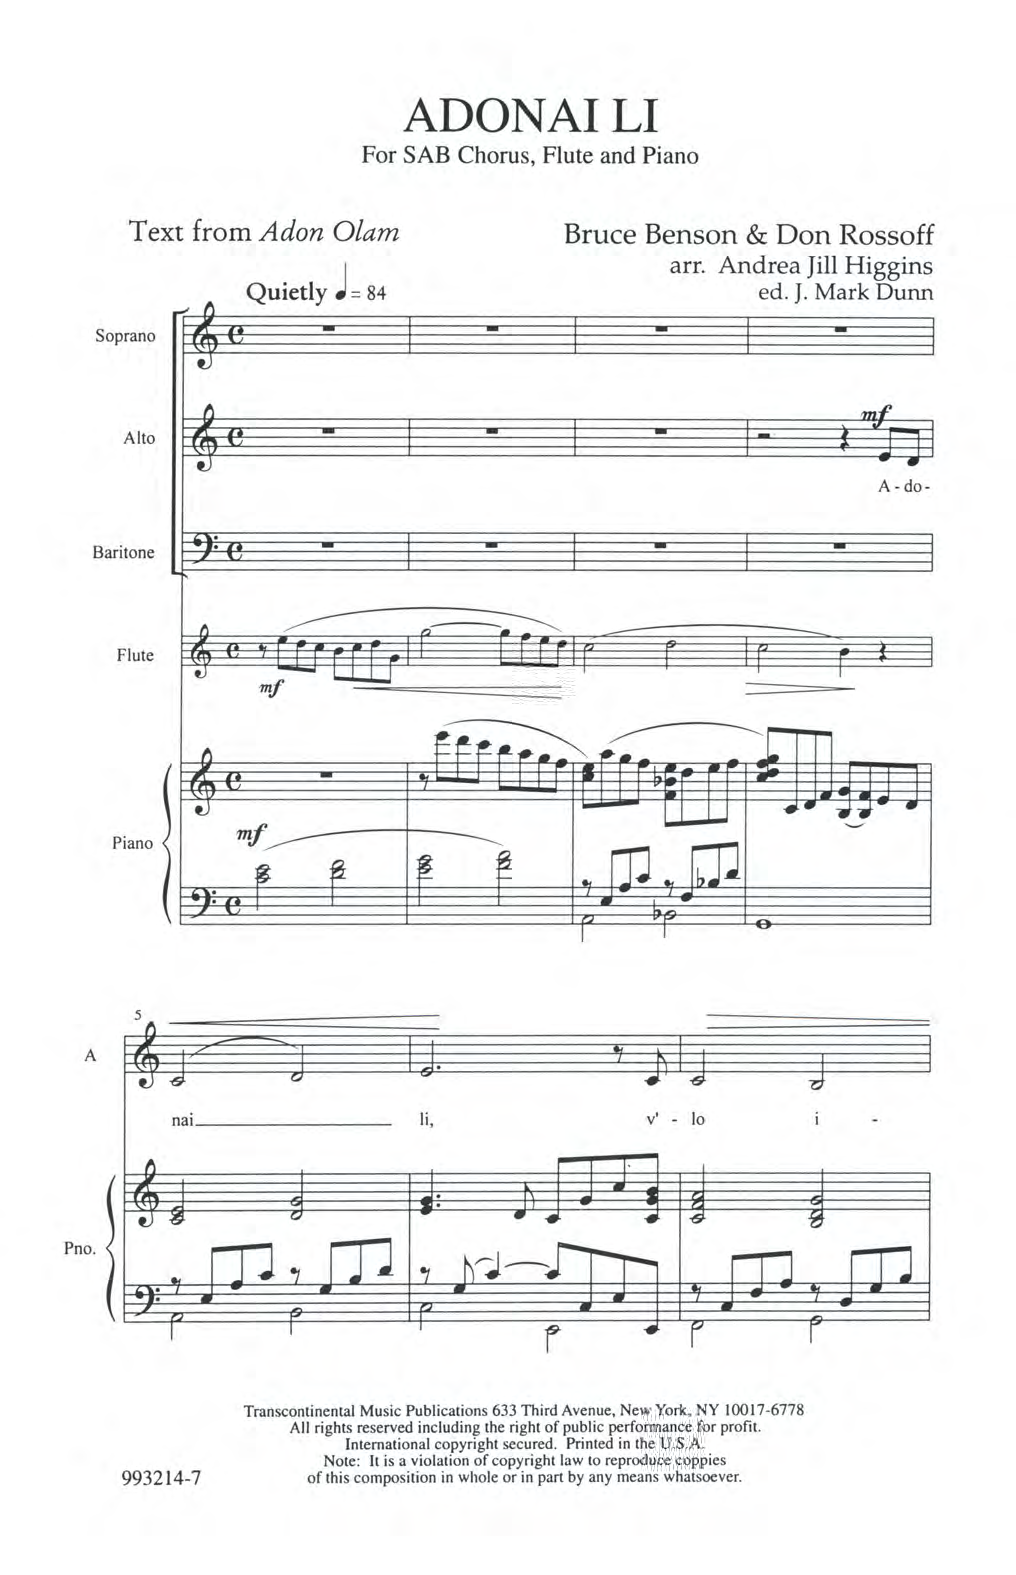 Andrea Jill Higgins Adonai Li Sheet Music Notes & Chords for Choral - Download or Print PDF